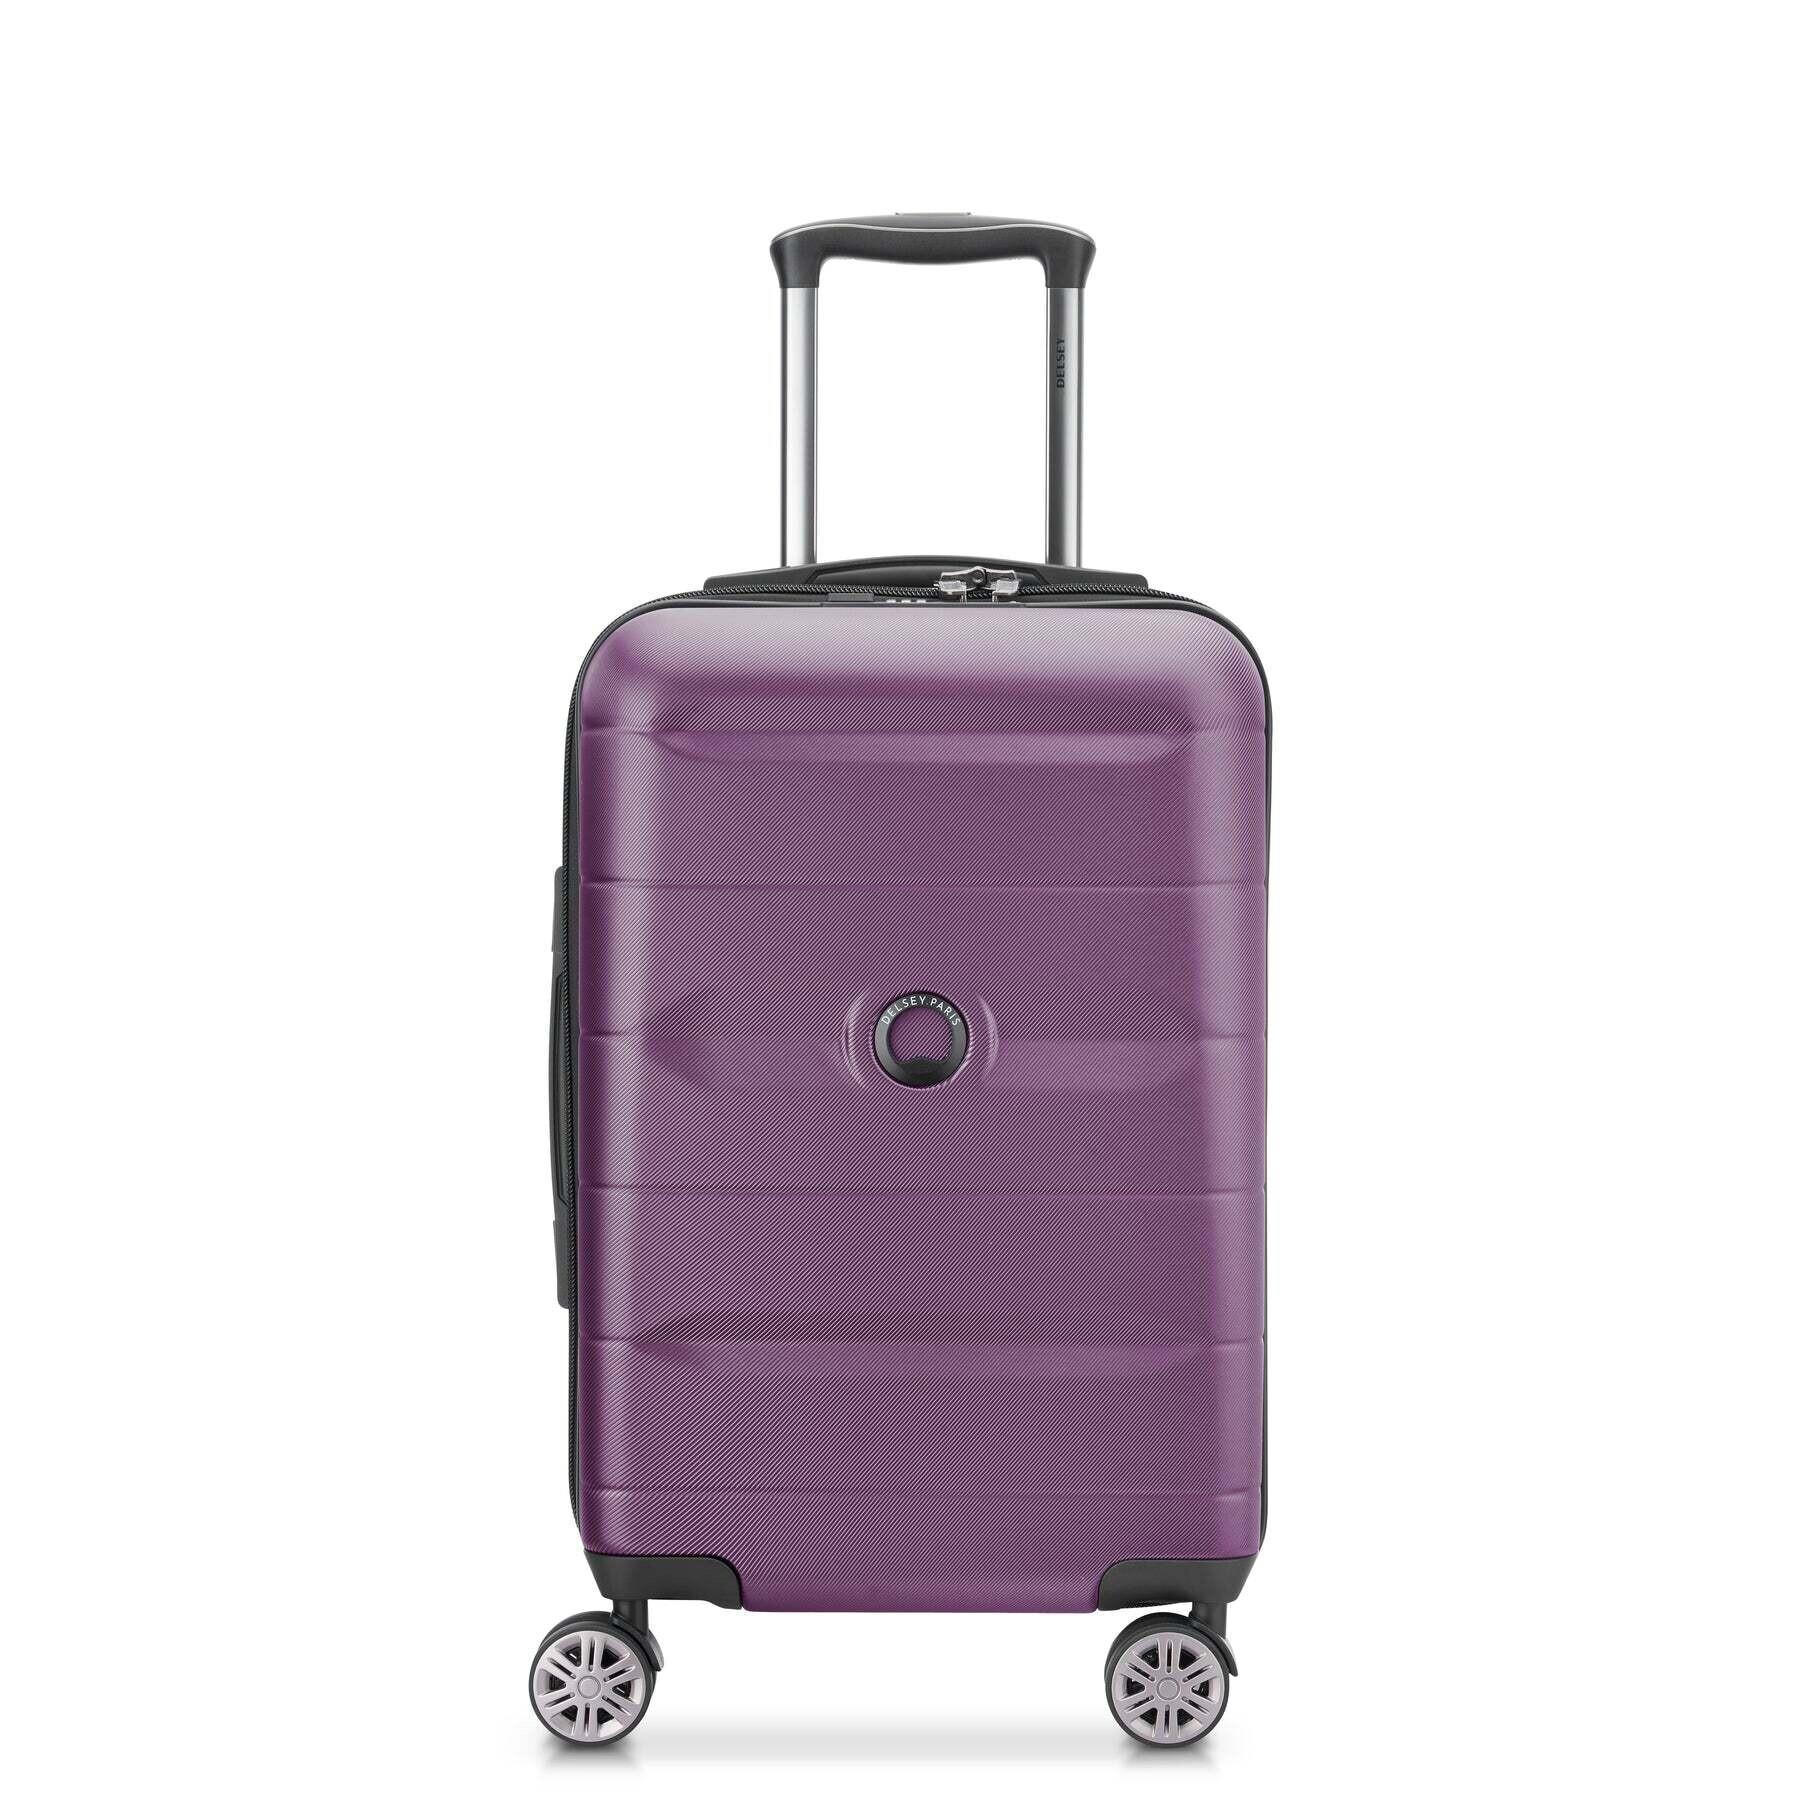 Carry-on suitcase 4 double wheels Delsey Comete 55 cm